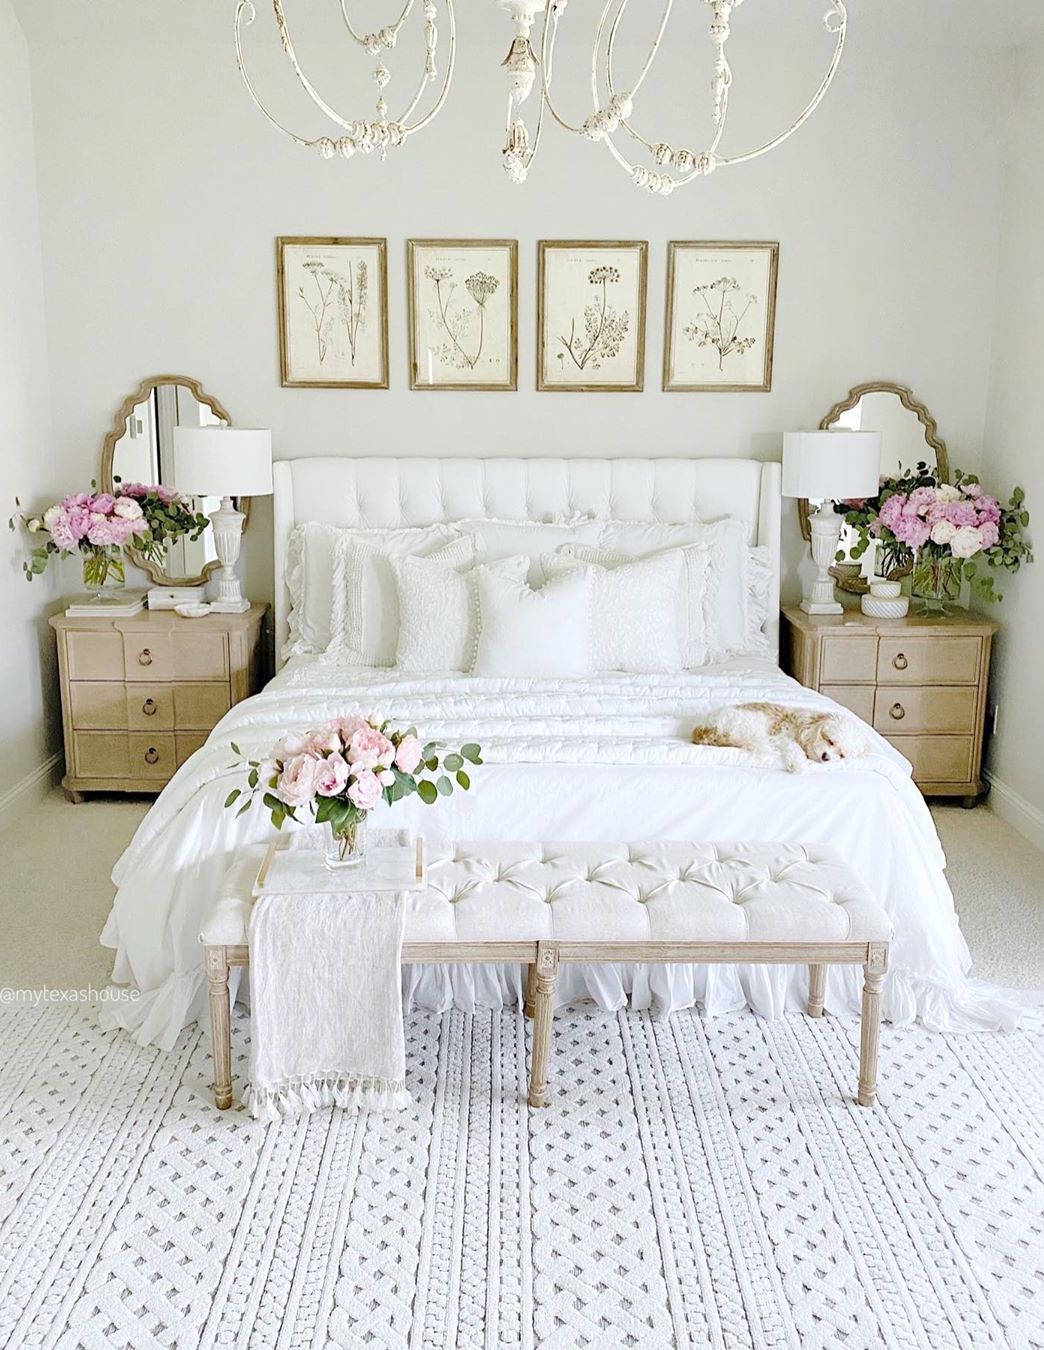 Feminine Bedroom with Pink Peonies via @mytexashouse